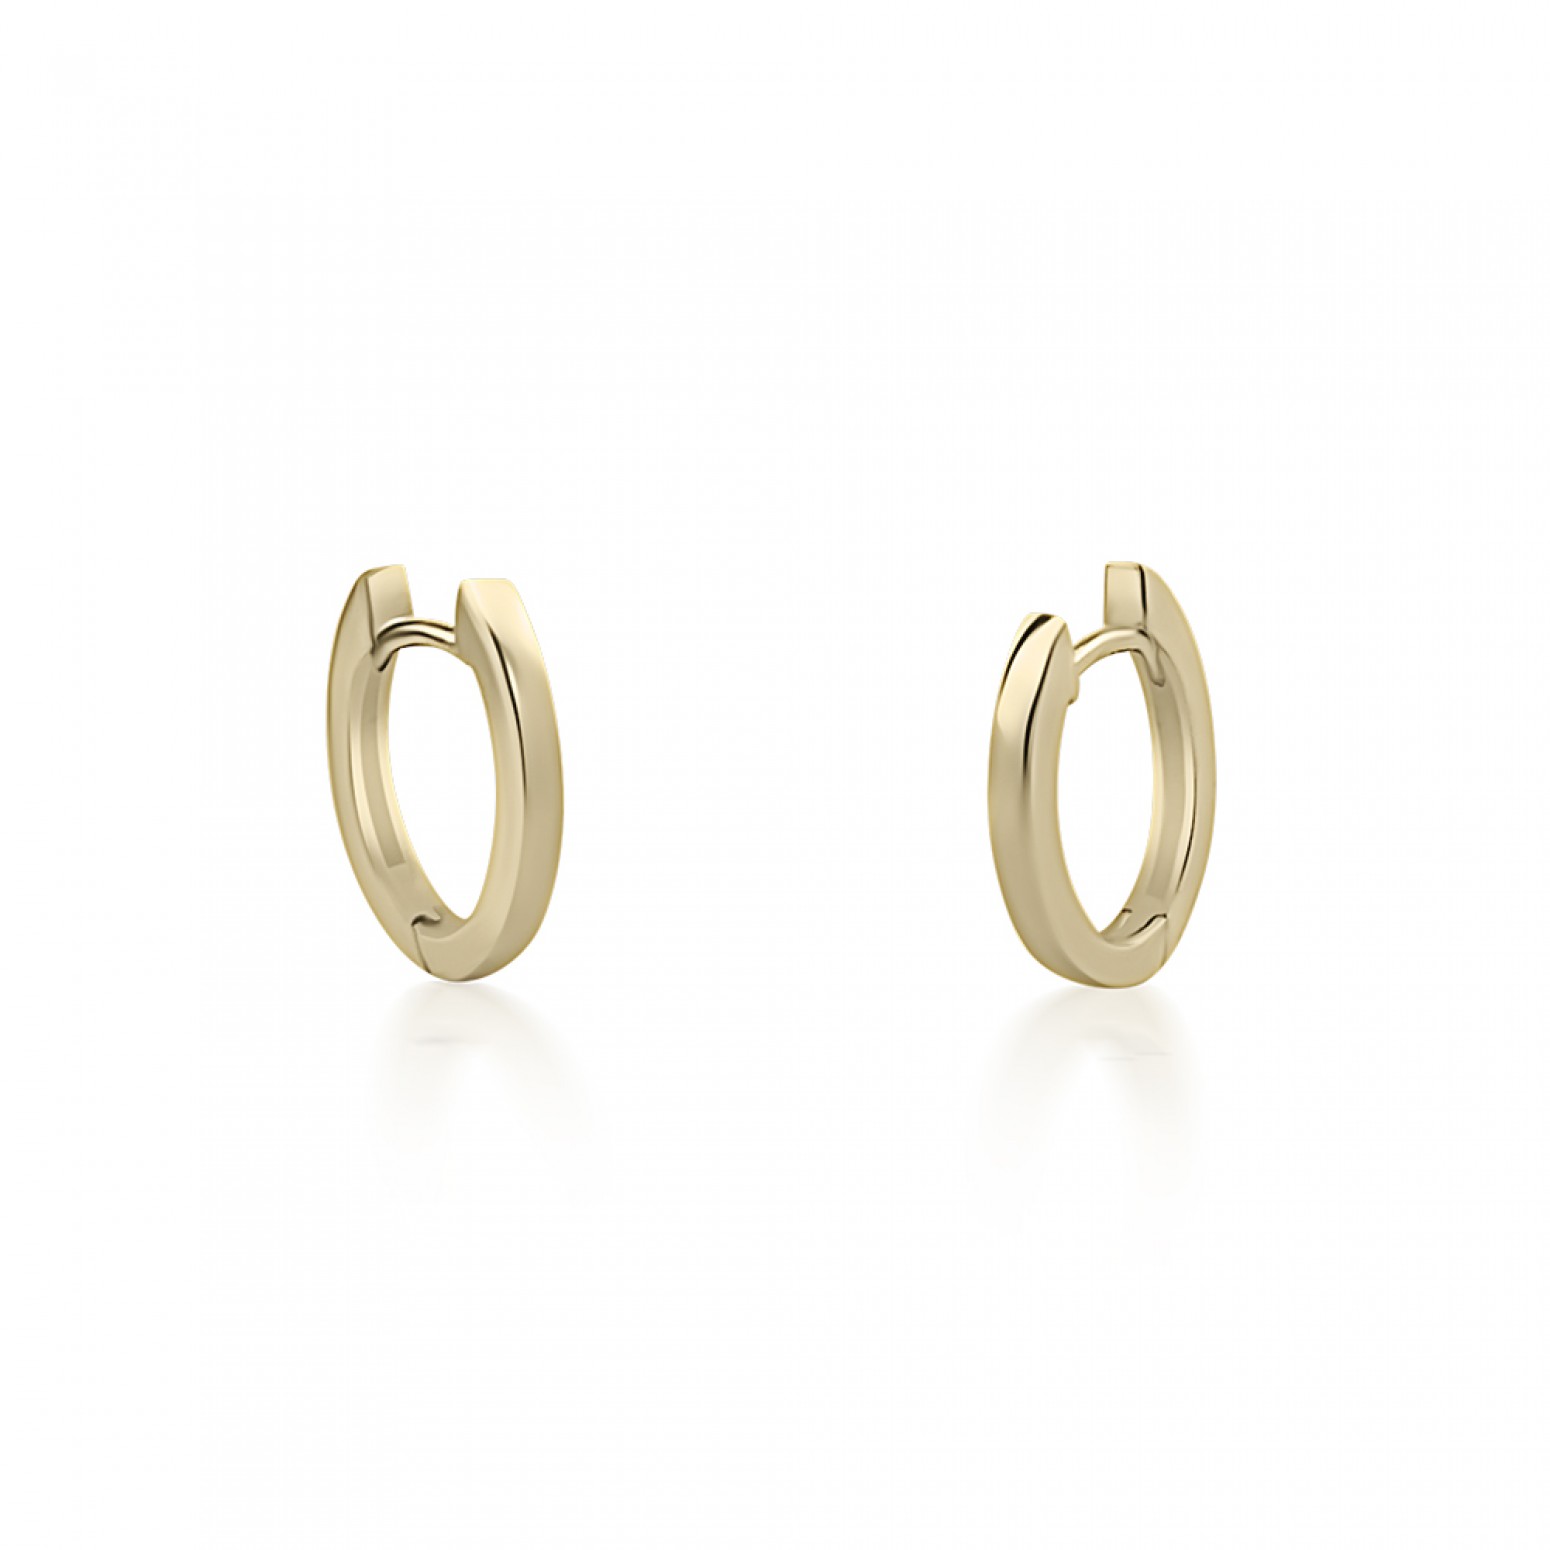 Hoop earrings oval K9 gold, sk2330 EARRINGS Κοσμηματα - chrilia.gr